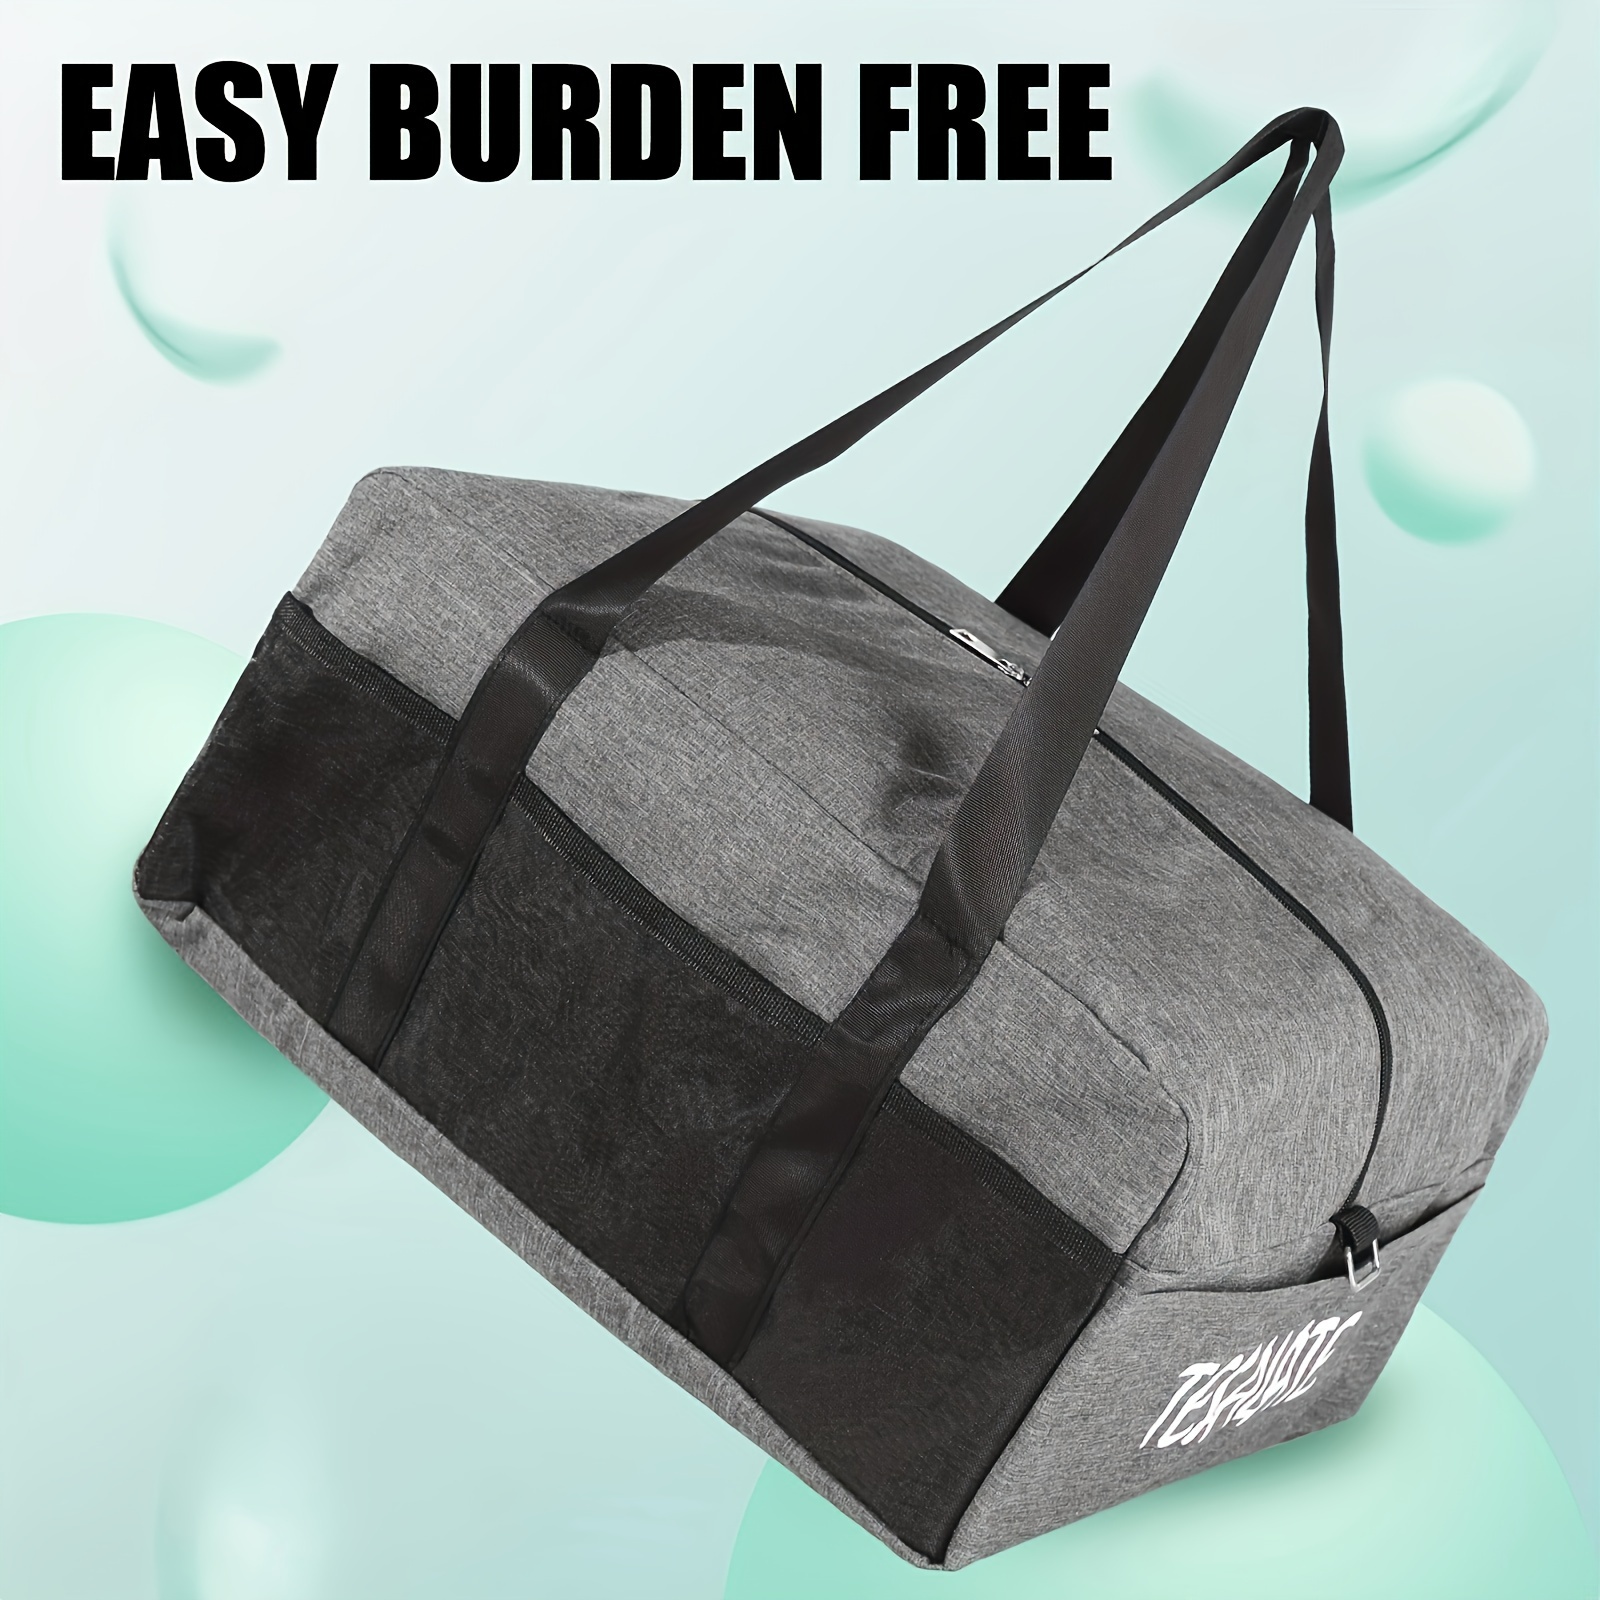 Duffel Bags & Gym Bags: Packable & Waterproof for Travel & Outdoors